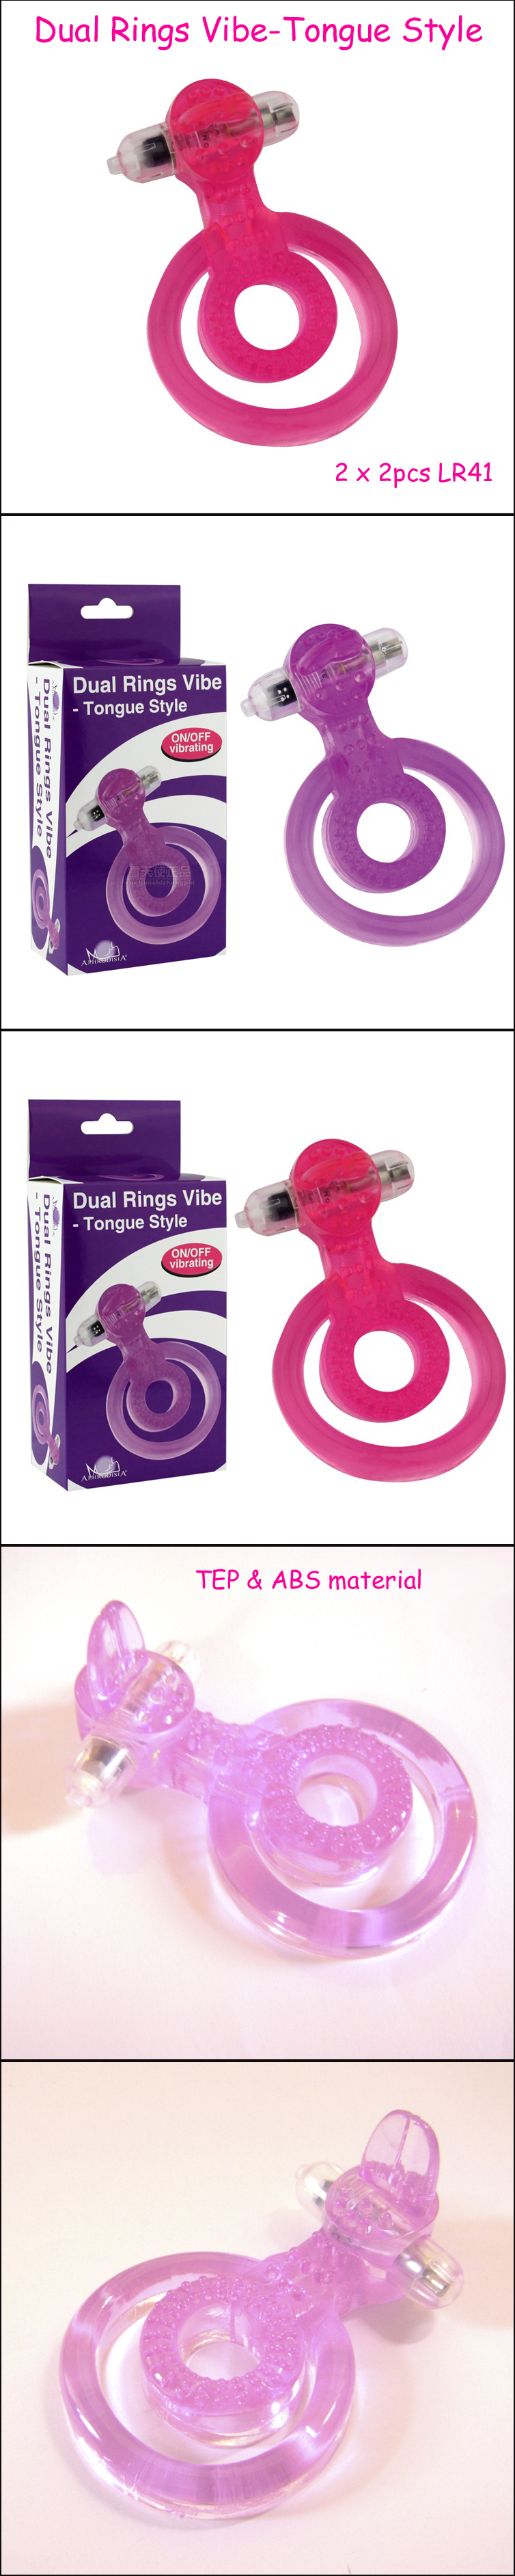 00-Dual Rings Vibe-Tongue style -001